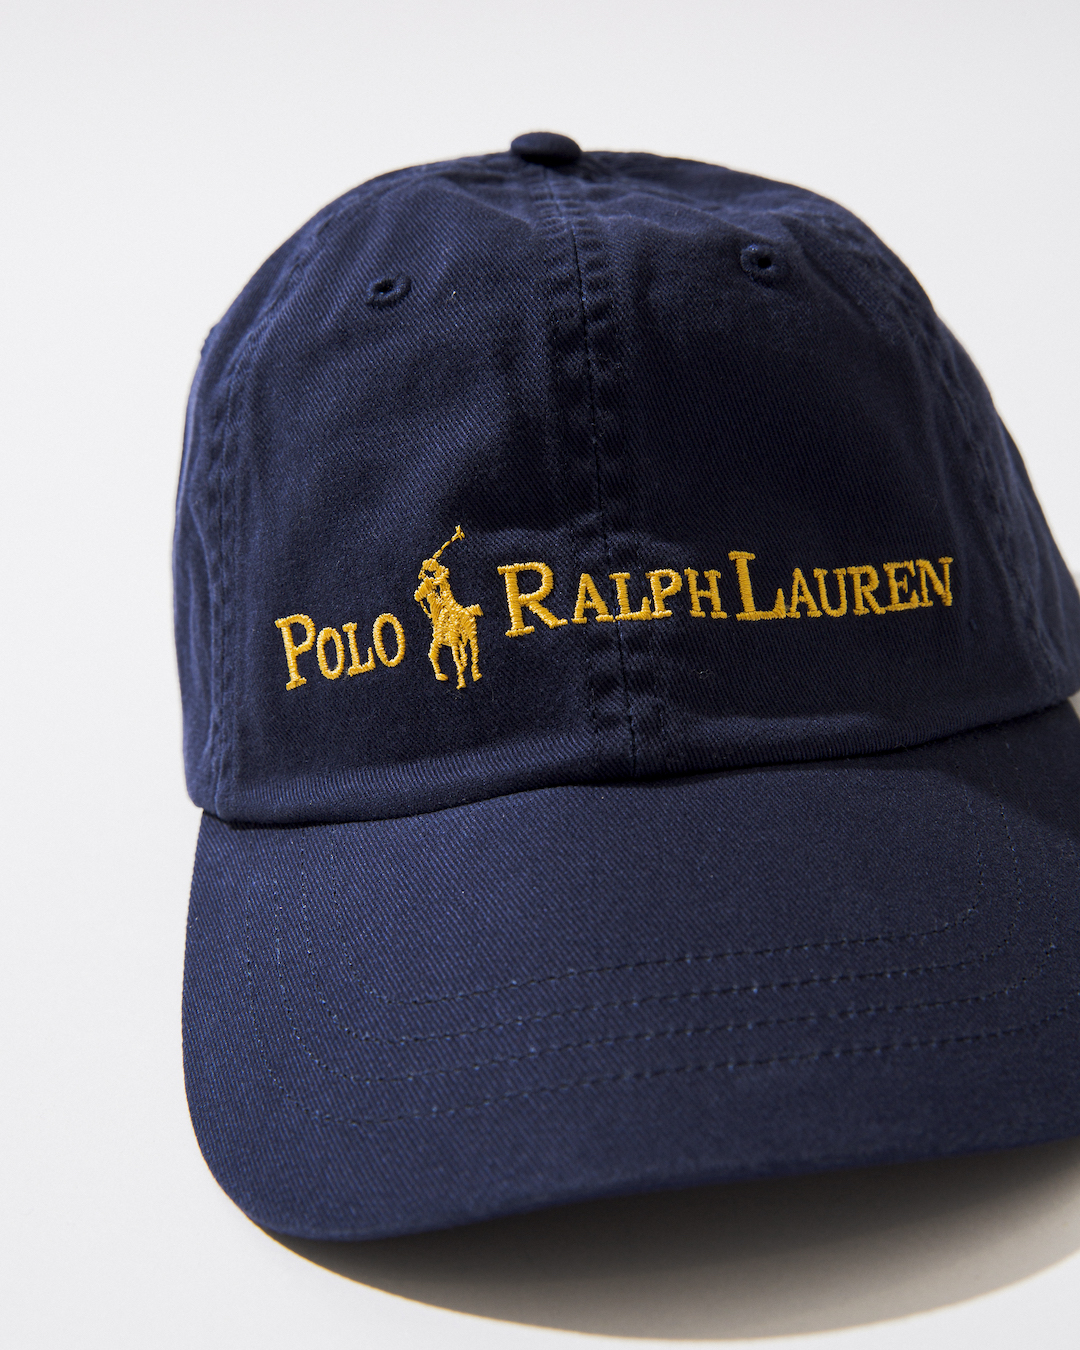 Polo Ralph LaurenとBEAMSによる『Navy and Gold Logo Collection』第2弾